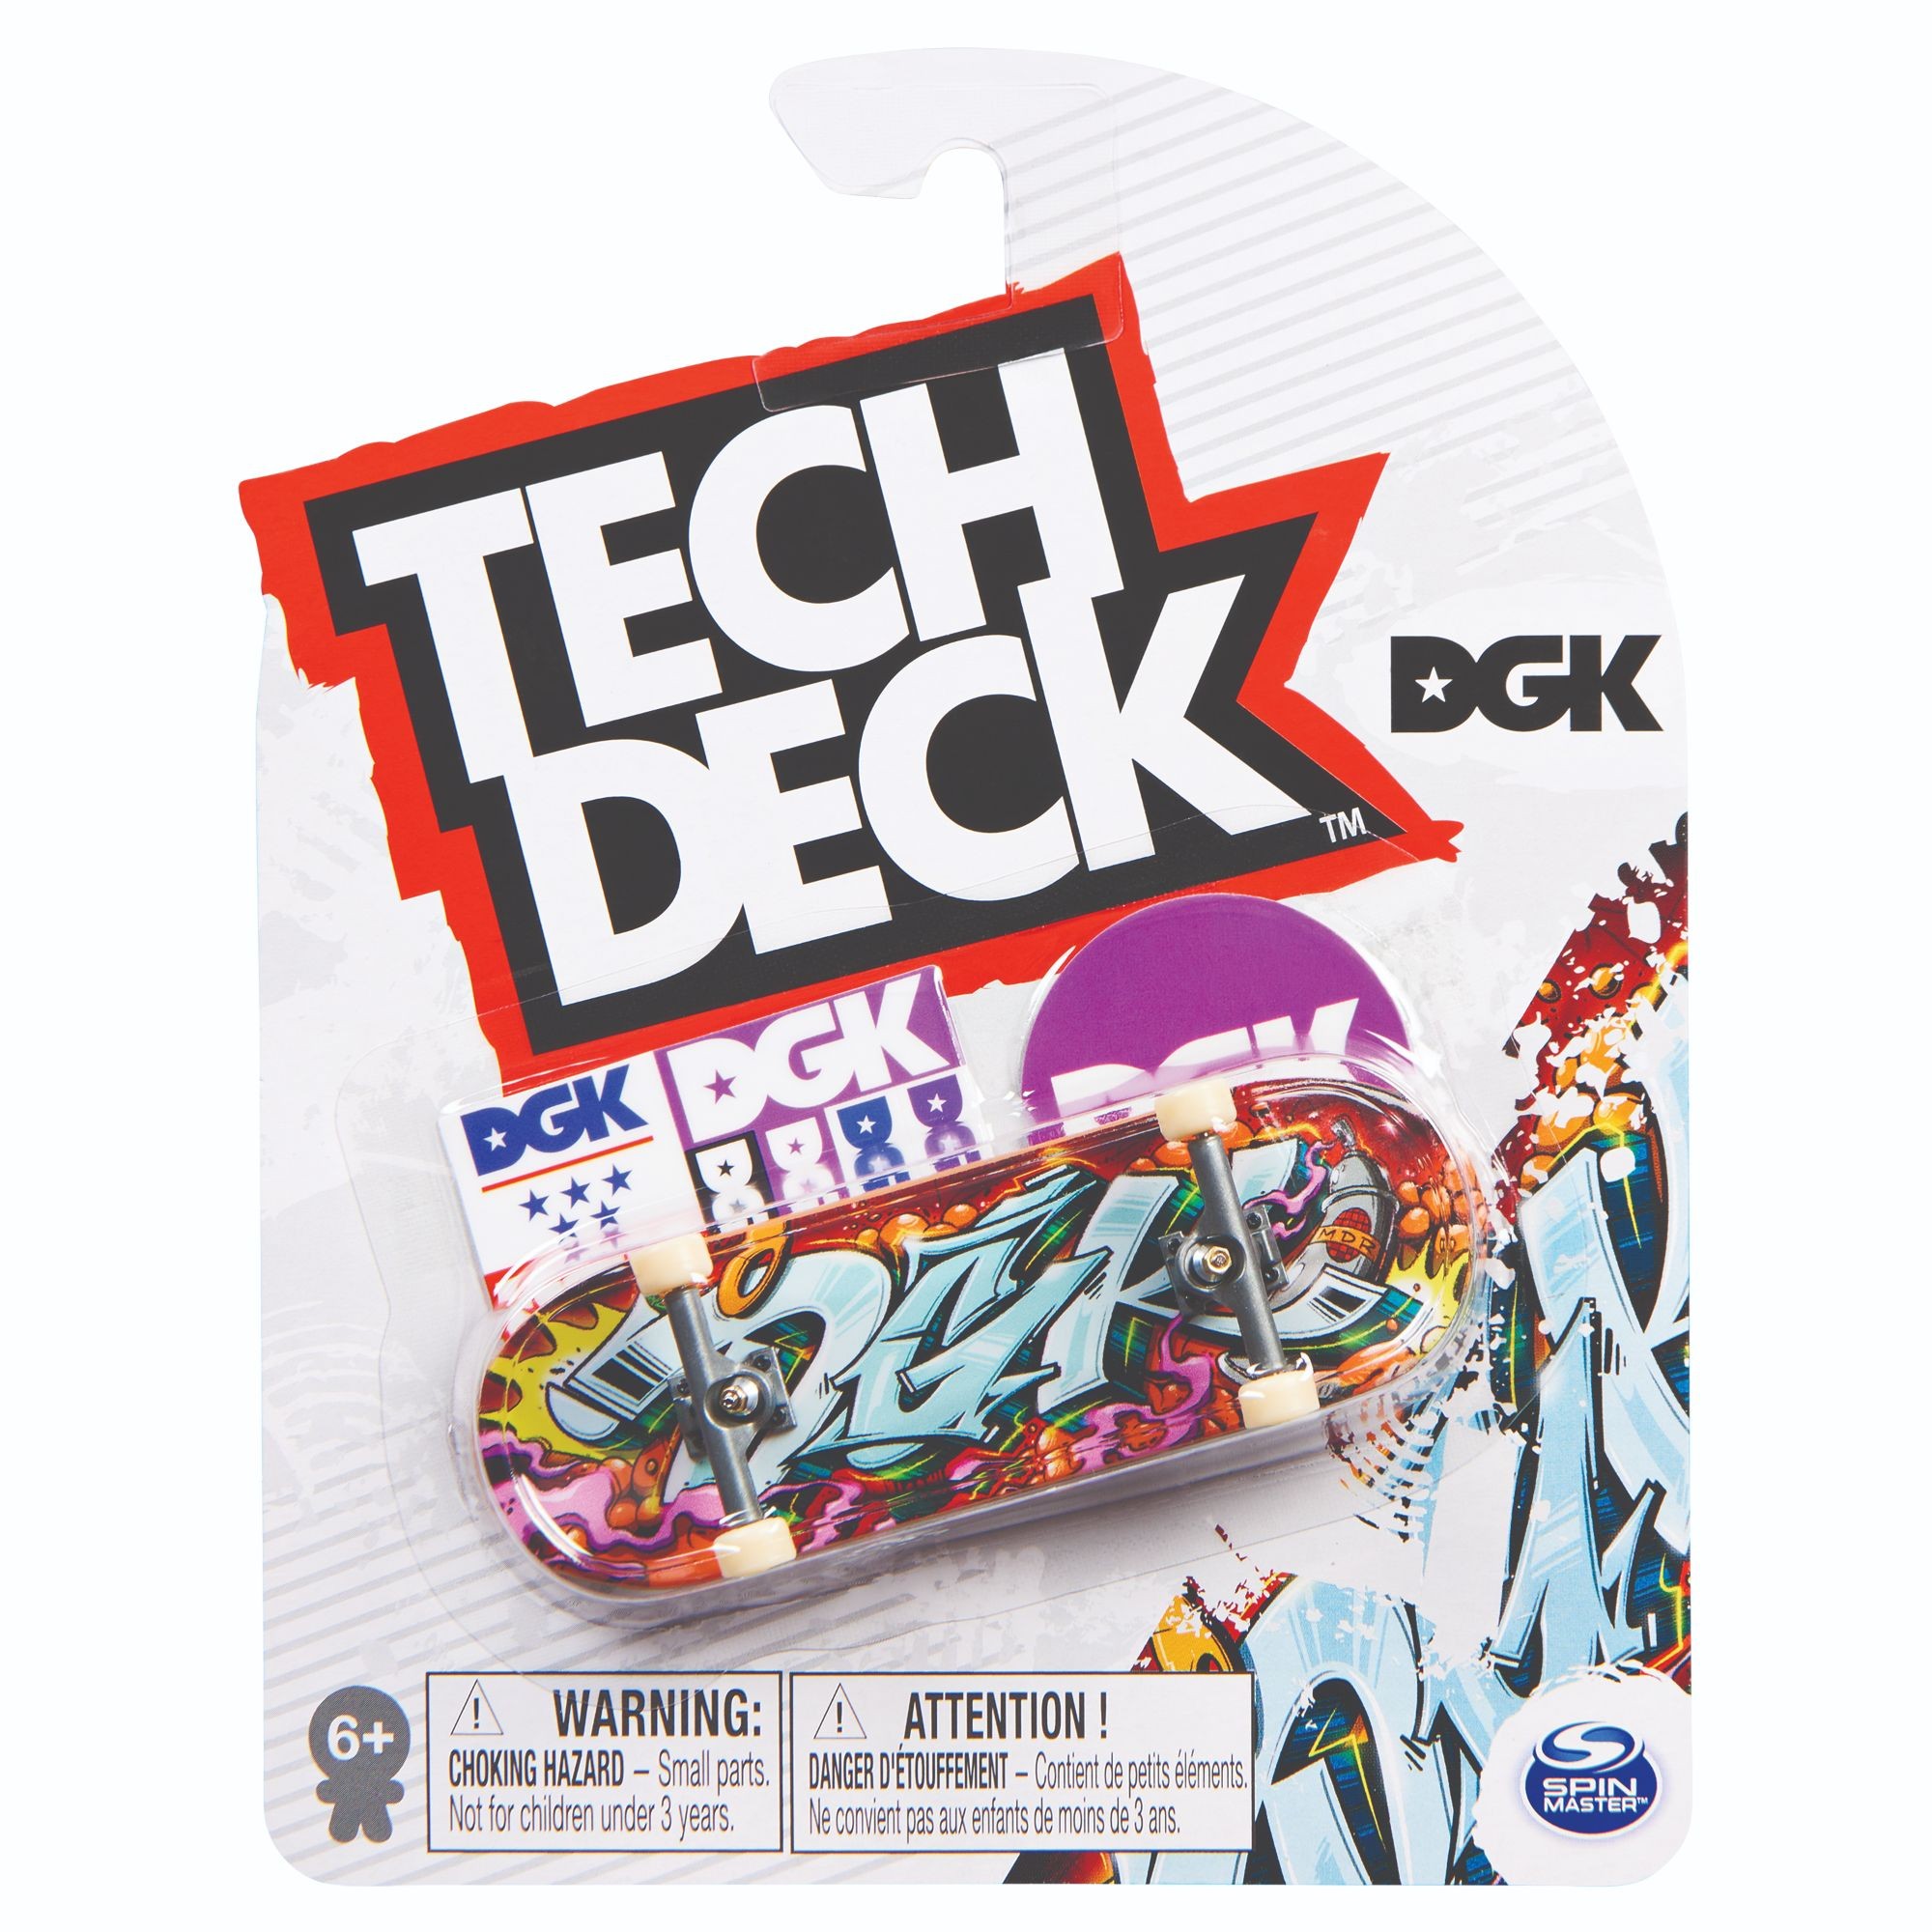 Tech Deck Fingerboard - DGK Black Photo Series - Single pack